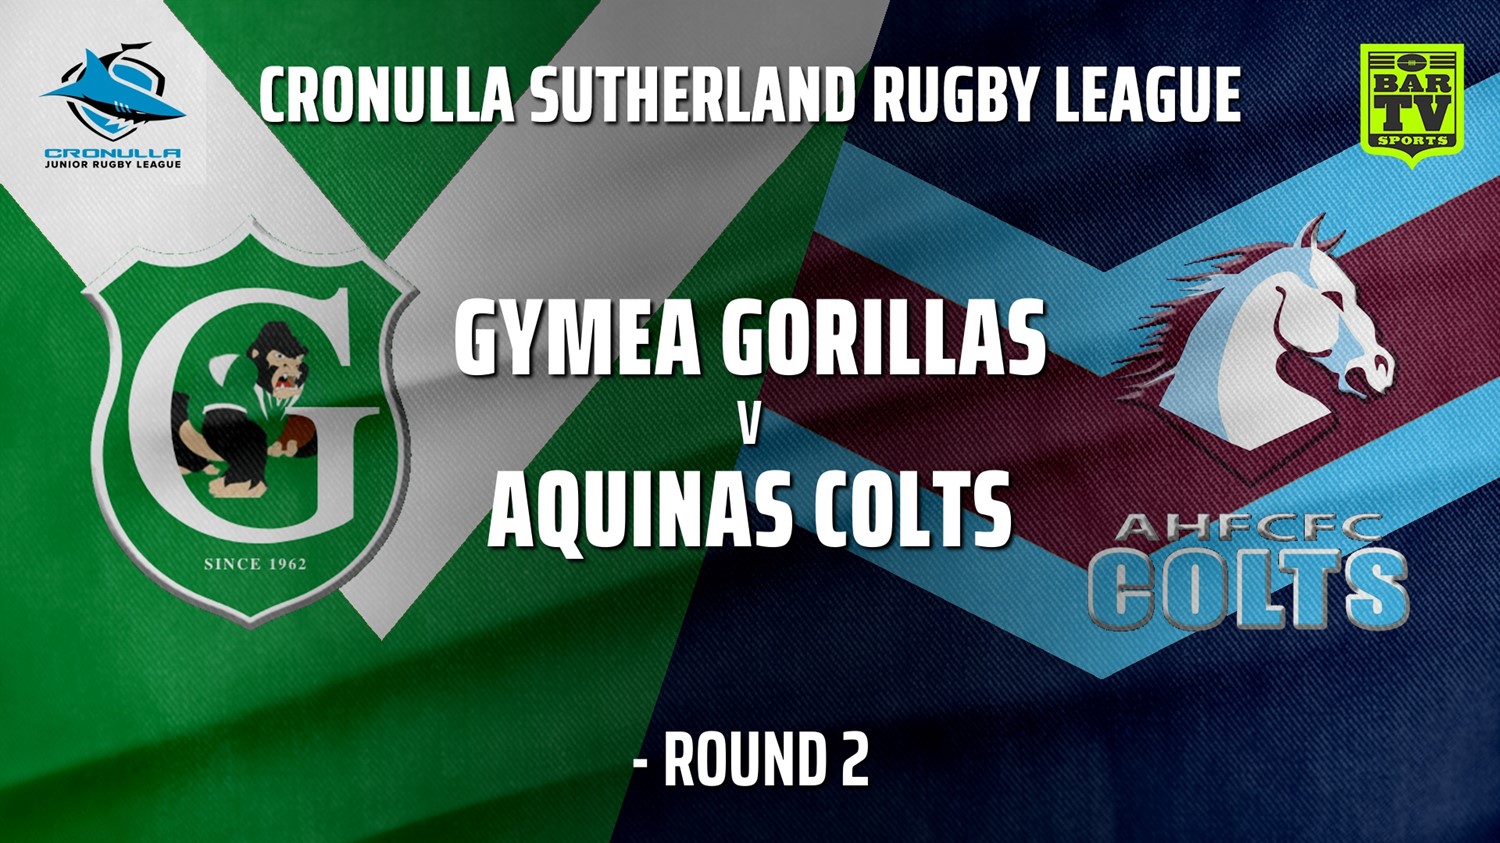 210508-Cronulla JRL Under 7 RED Round 2 - Gymea Gorillas v Aquinas Colts Minigame Slate Image